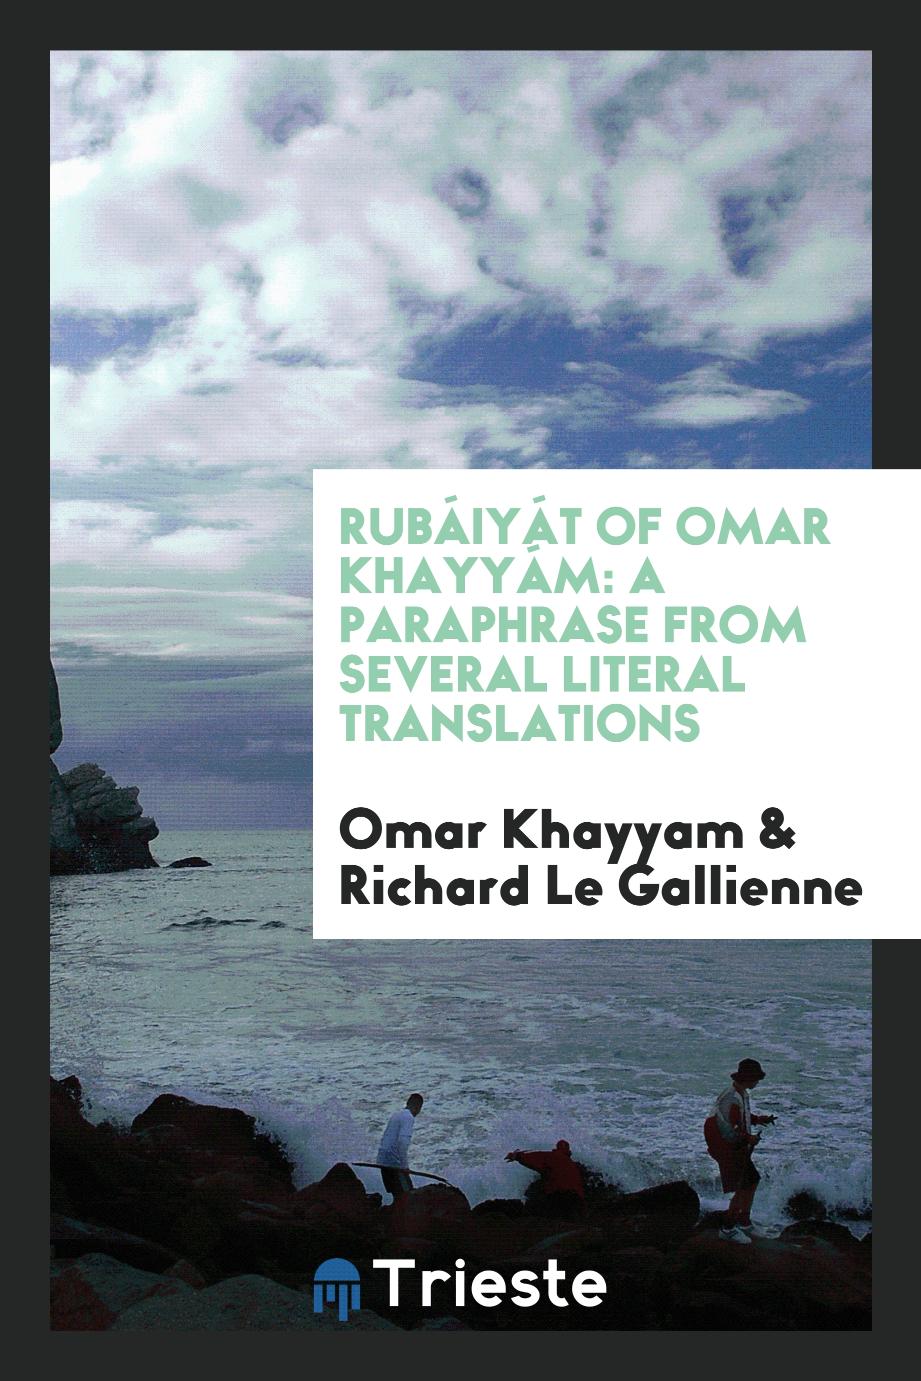 Rubáiyát of Omar Khayyám: a paraphrase from several literal translations